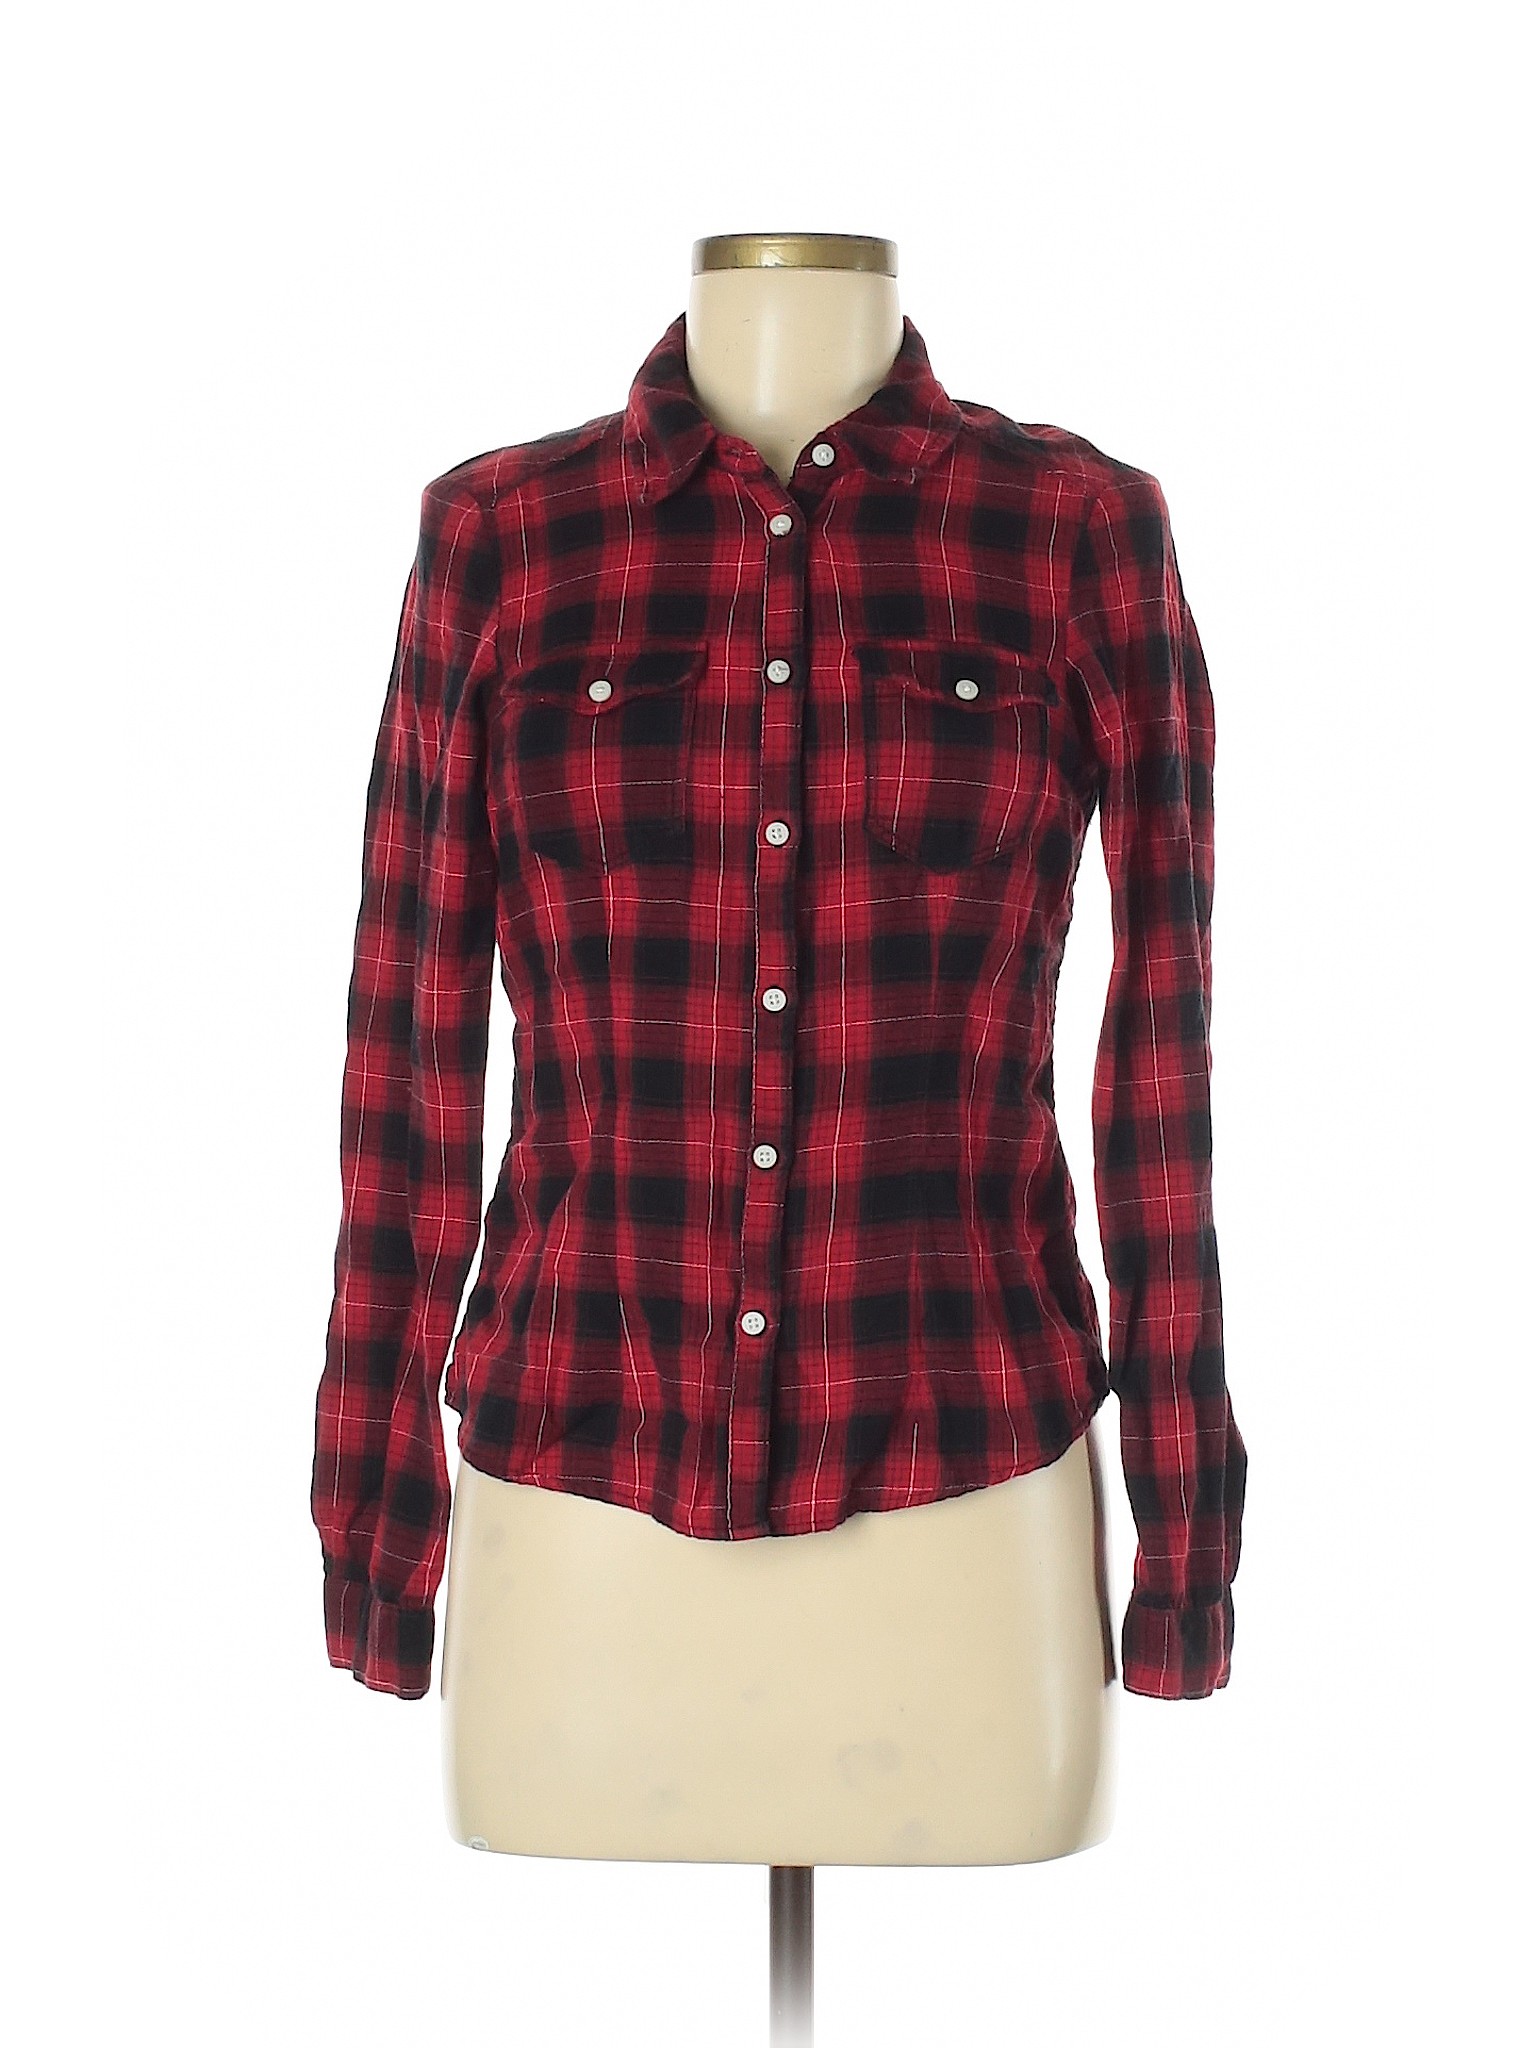 H&M Women Red Long Sleeve Button-Down Shirt 6 | eBay